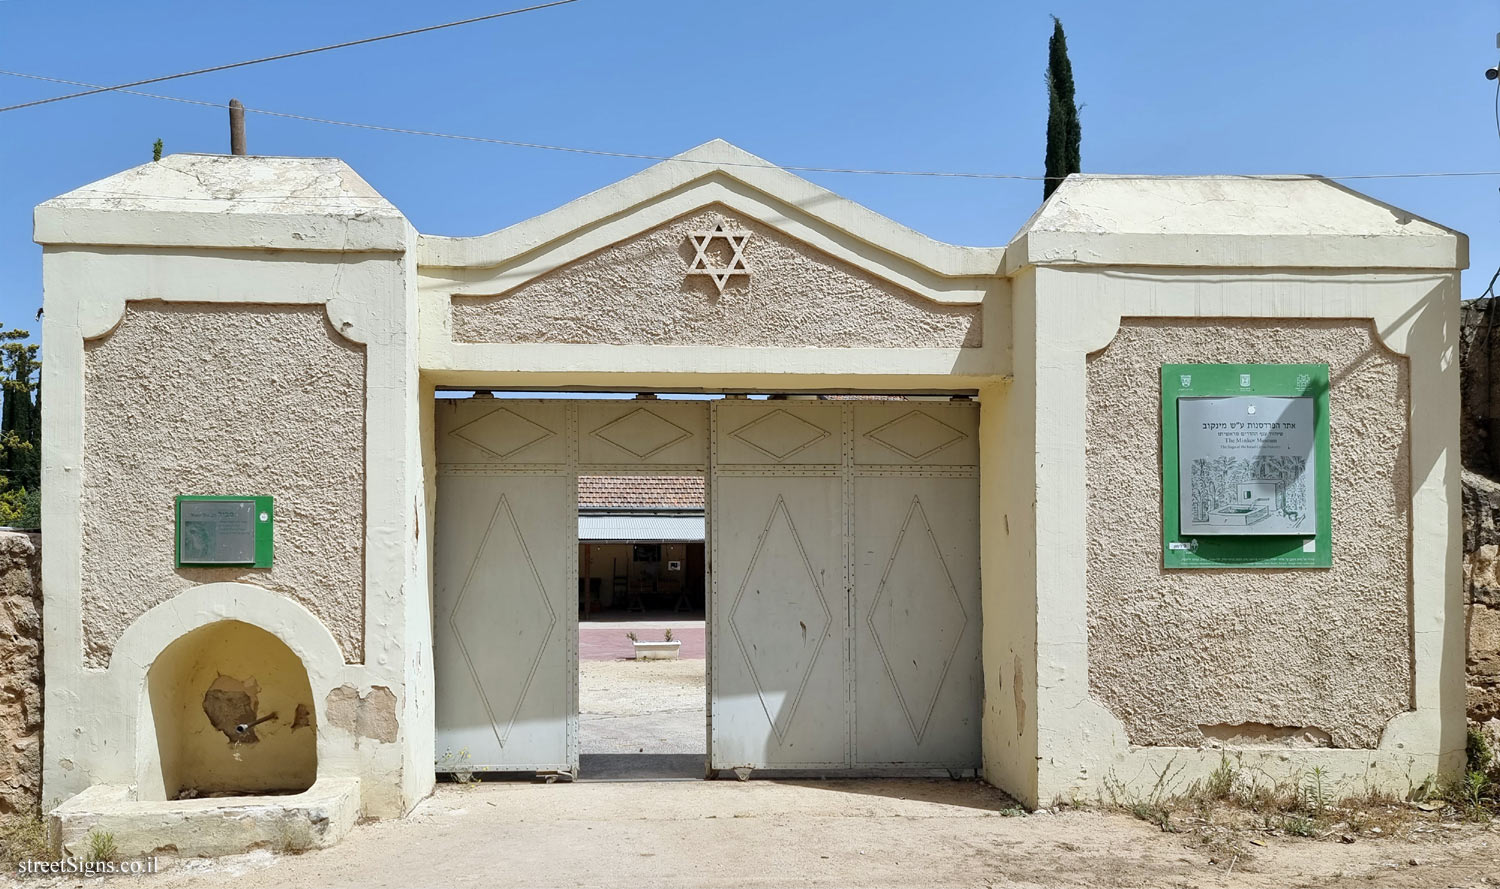 Rehovot - Heritage Sites in Israel - The orchard site named after Minkov - Avinoam Nahmani St, Rehovot, Israel